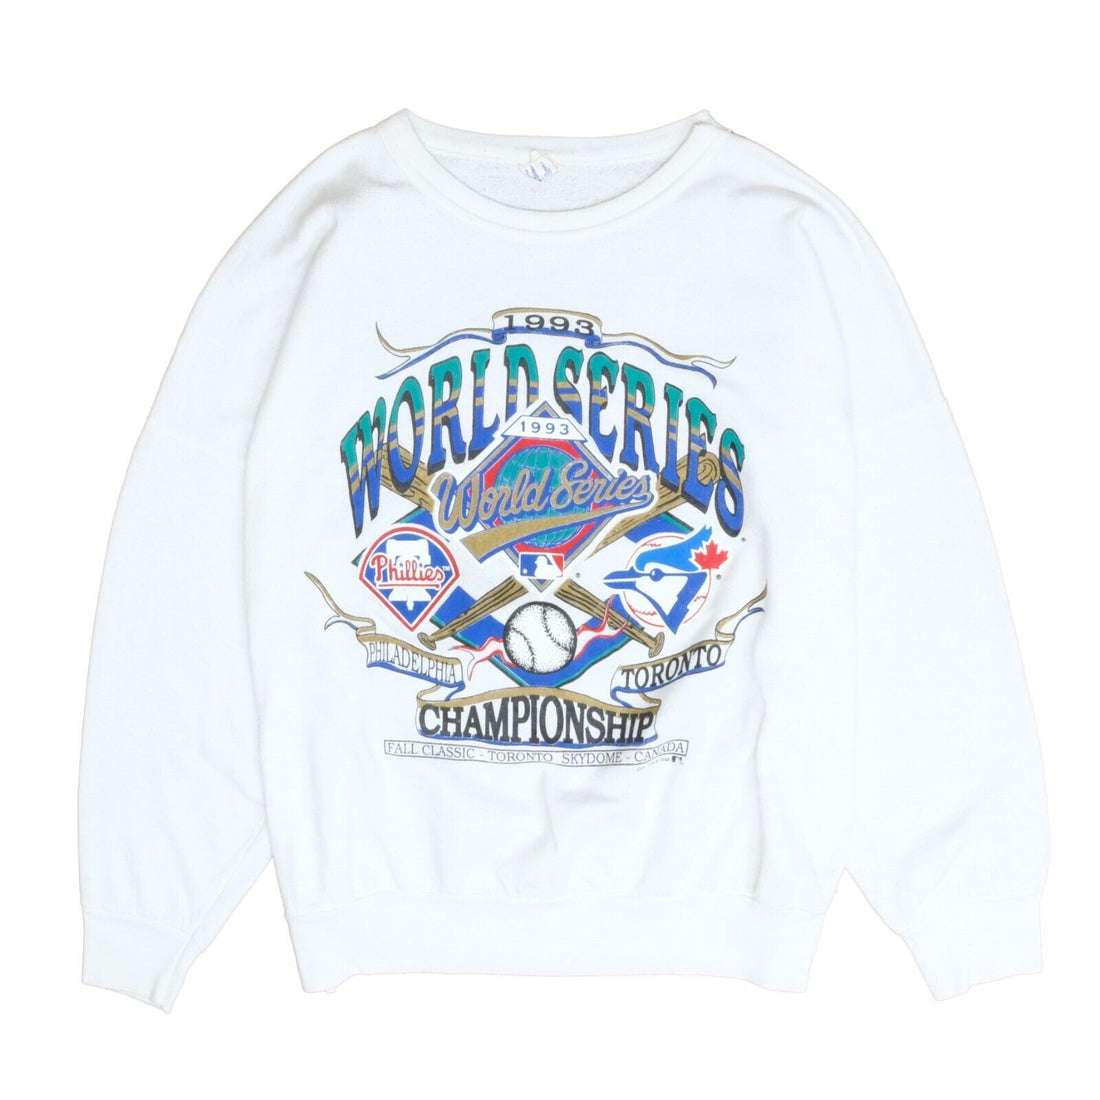 Vintage Toronto Blue Jays 1993 World Series Champions MLB Men's Large T  shirt